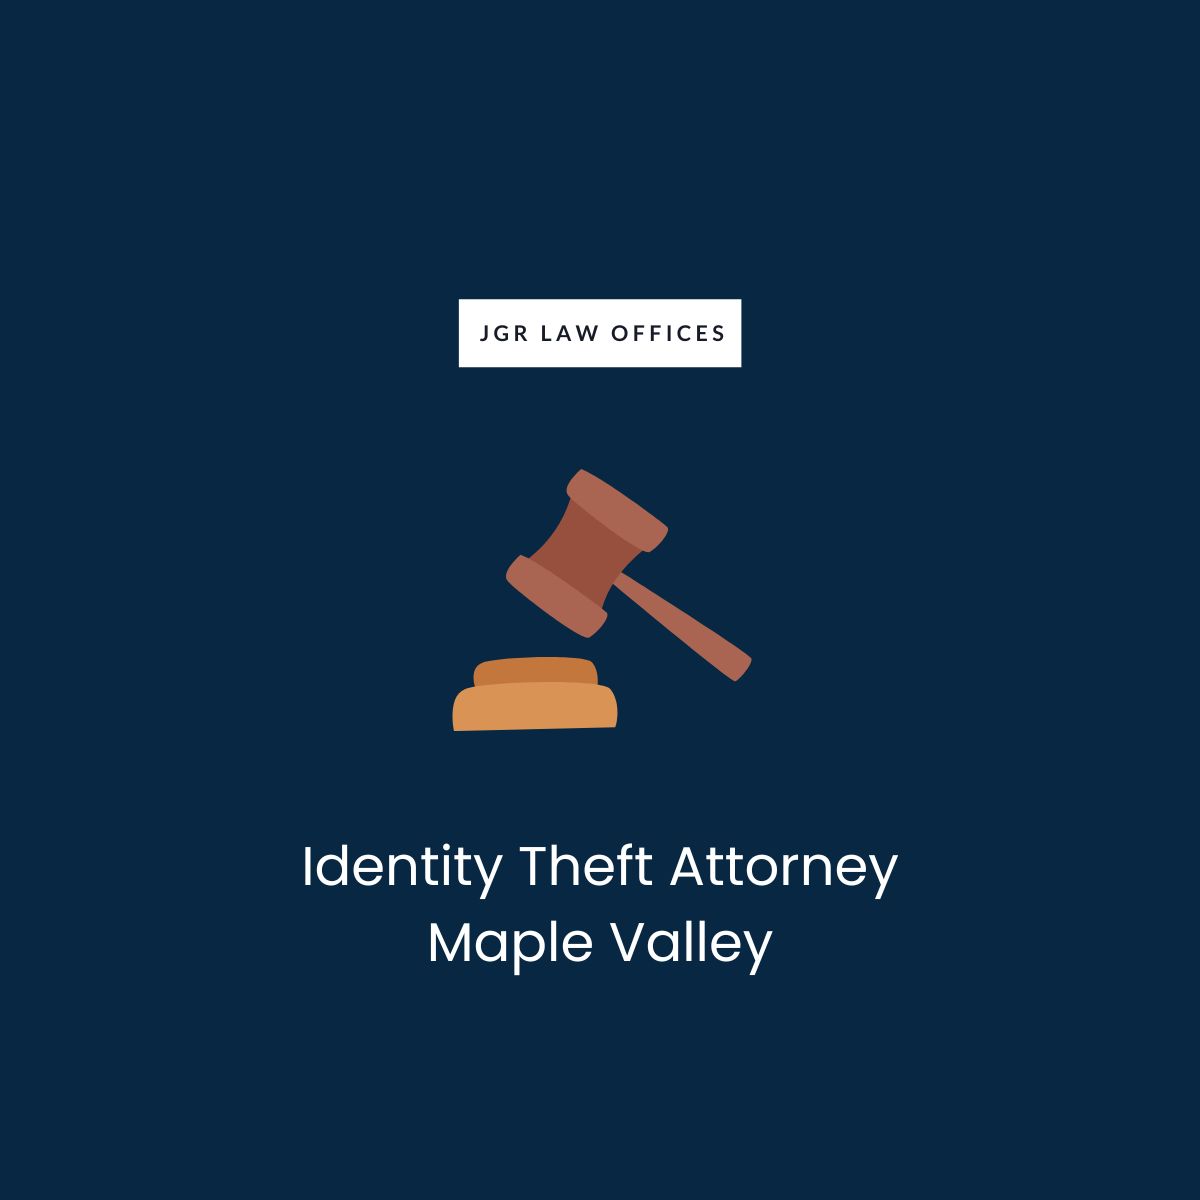 Identity Theft Attorney Maple Valley Identity Theft Identity Theft